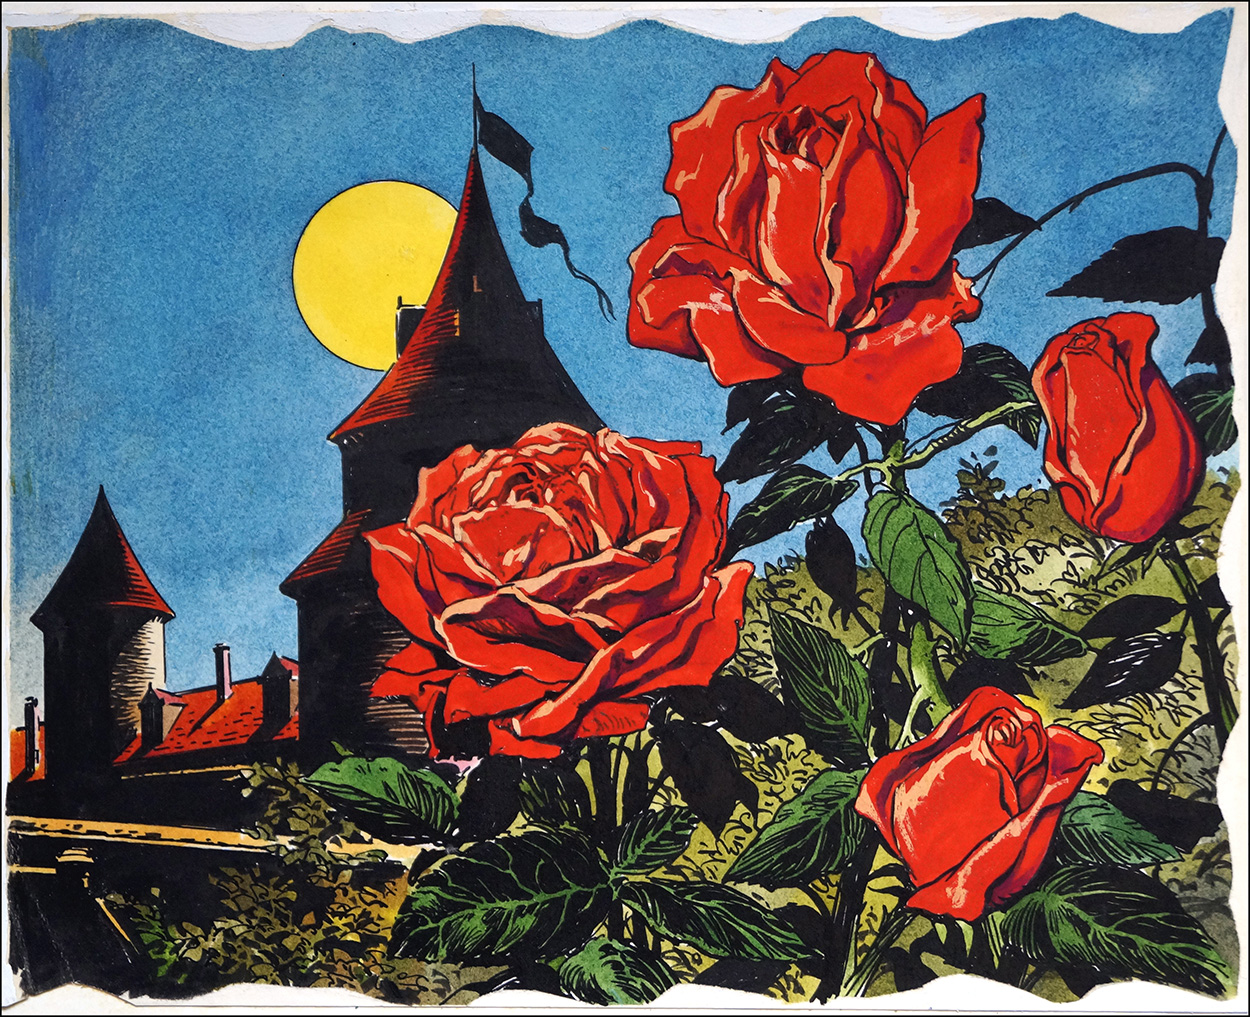 Sleeping Beauty - Red Roses (Original) art by Sleeping Beauty (Blasco) at The Illustration Art Gallery